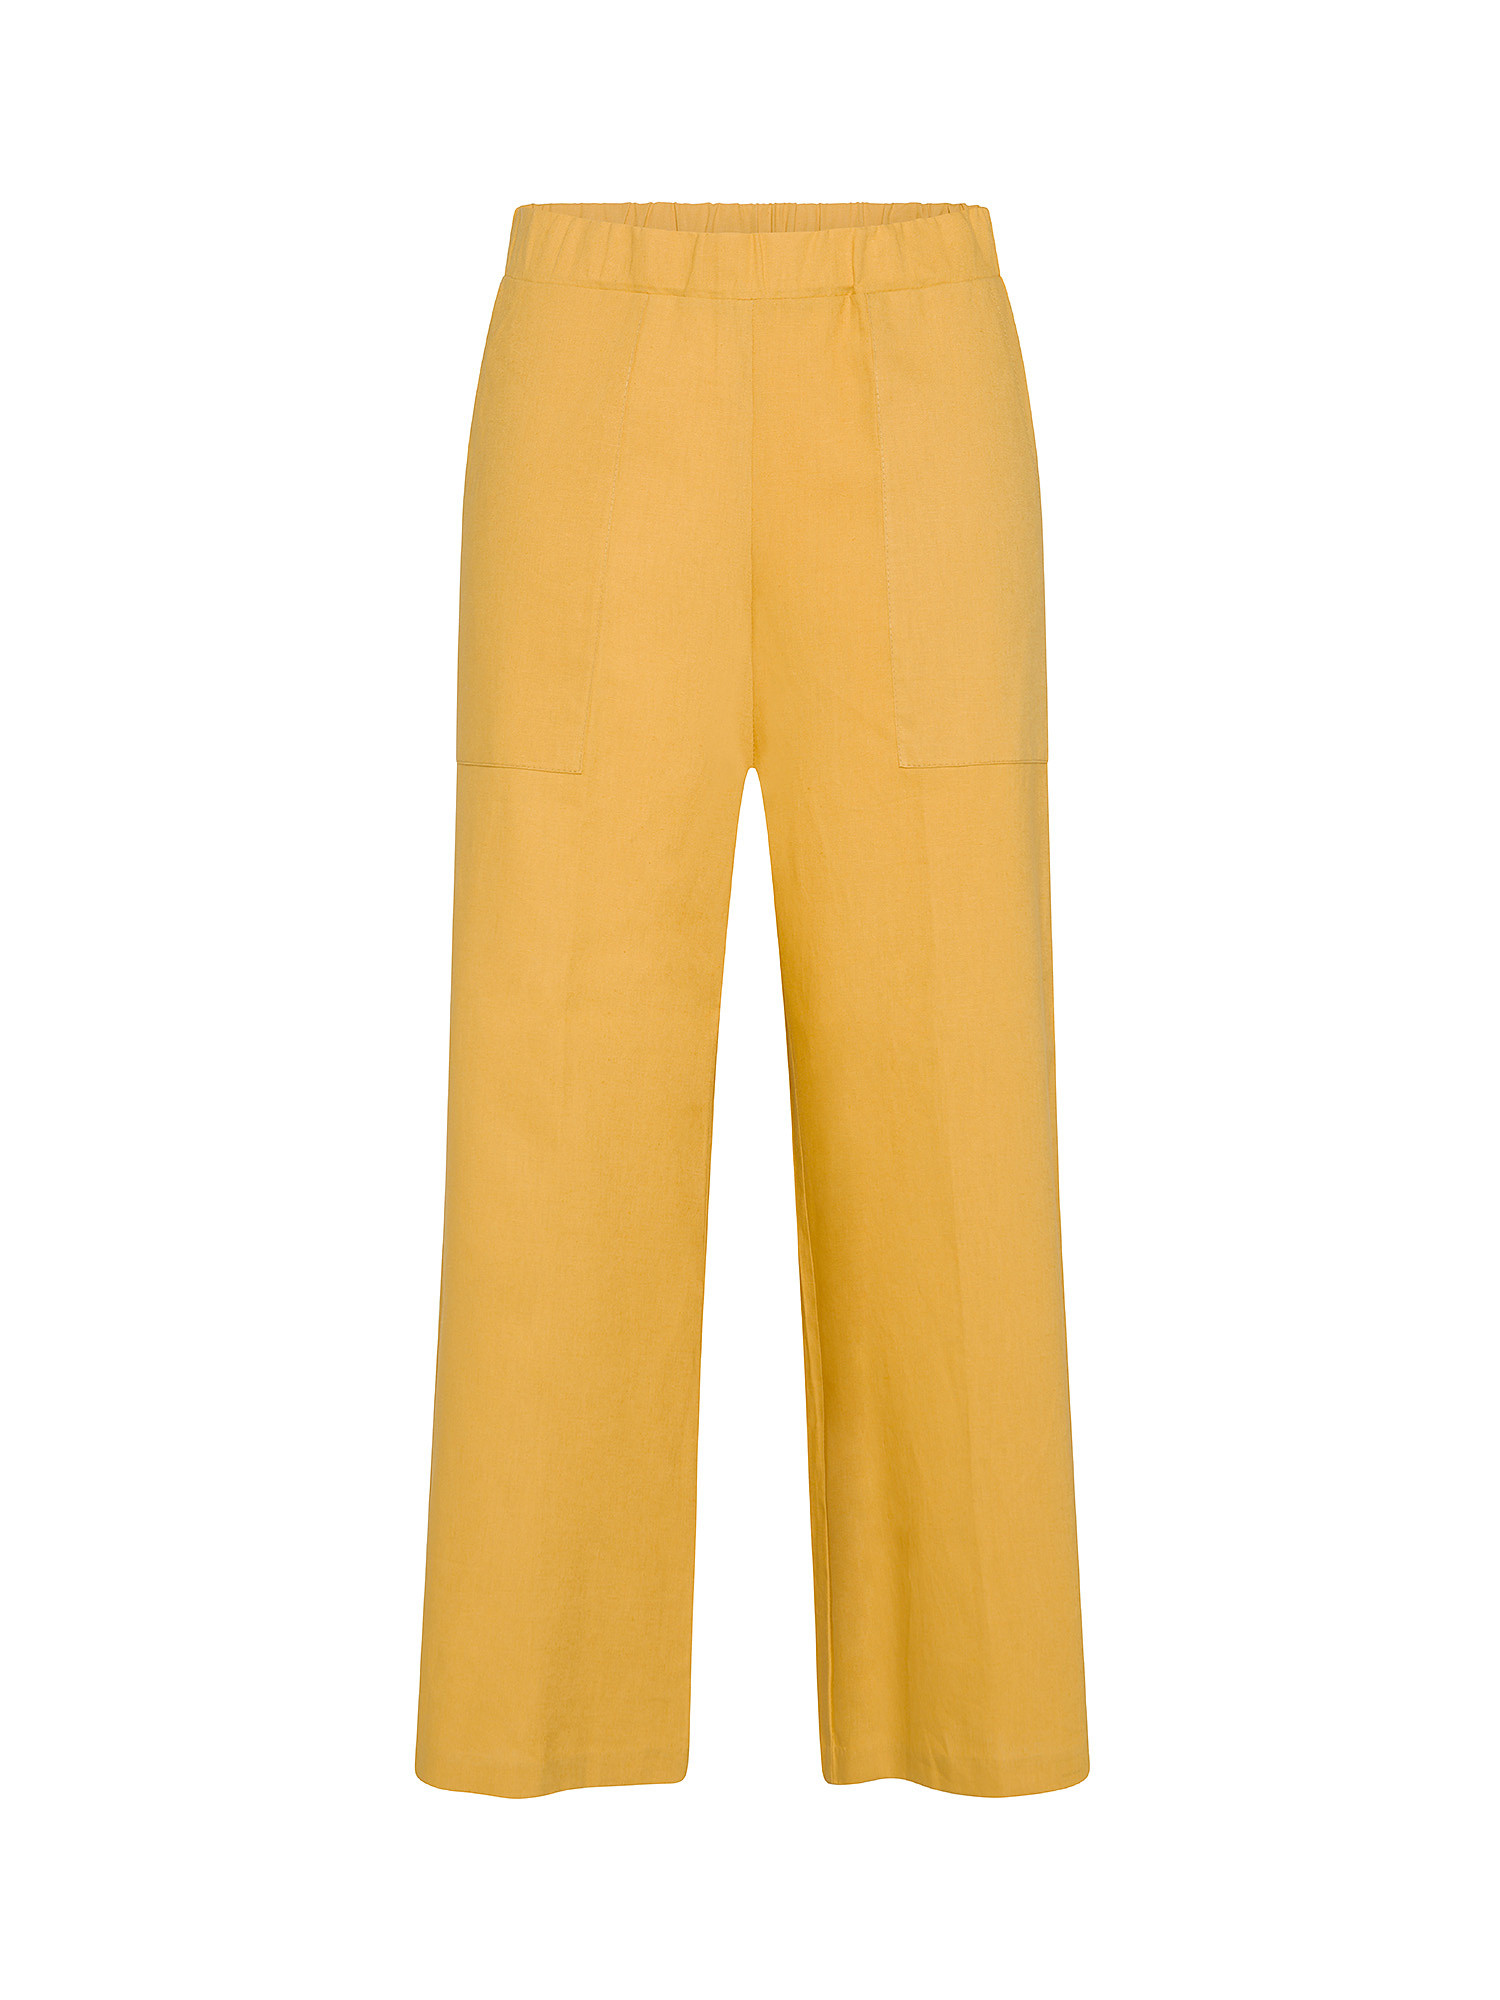 Koan - Wide-leg trousers in linen blend, Mustard Yellow, large image number 0